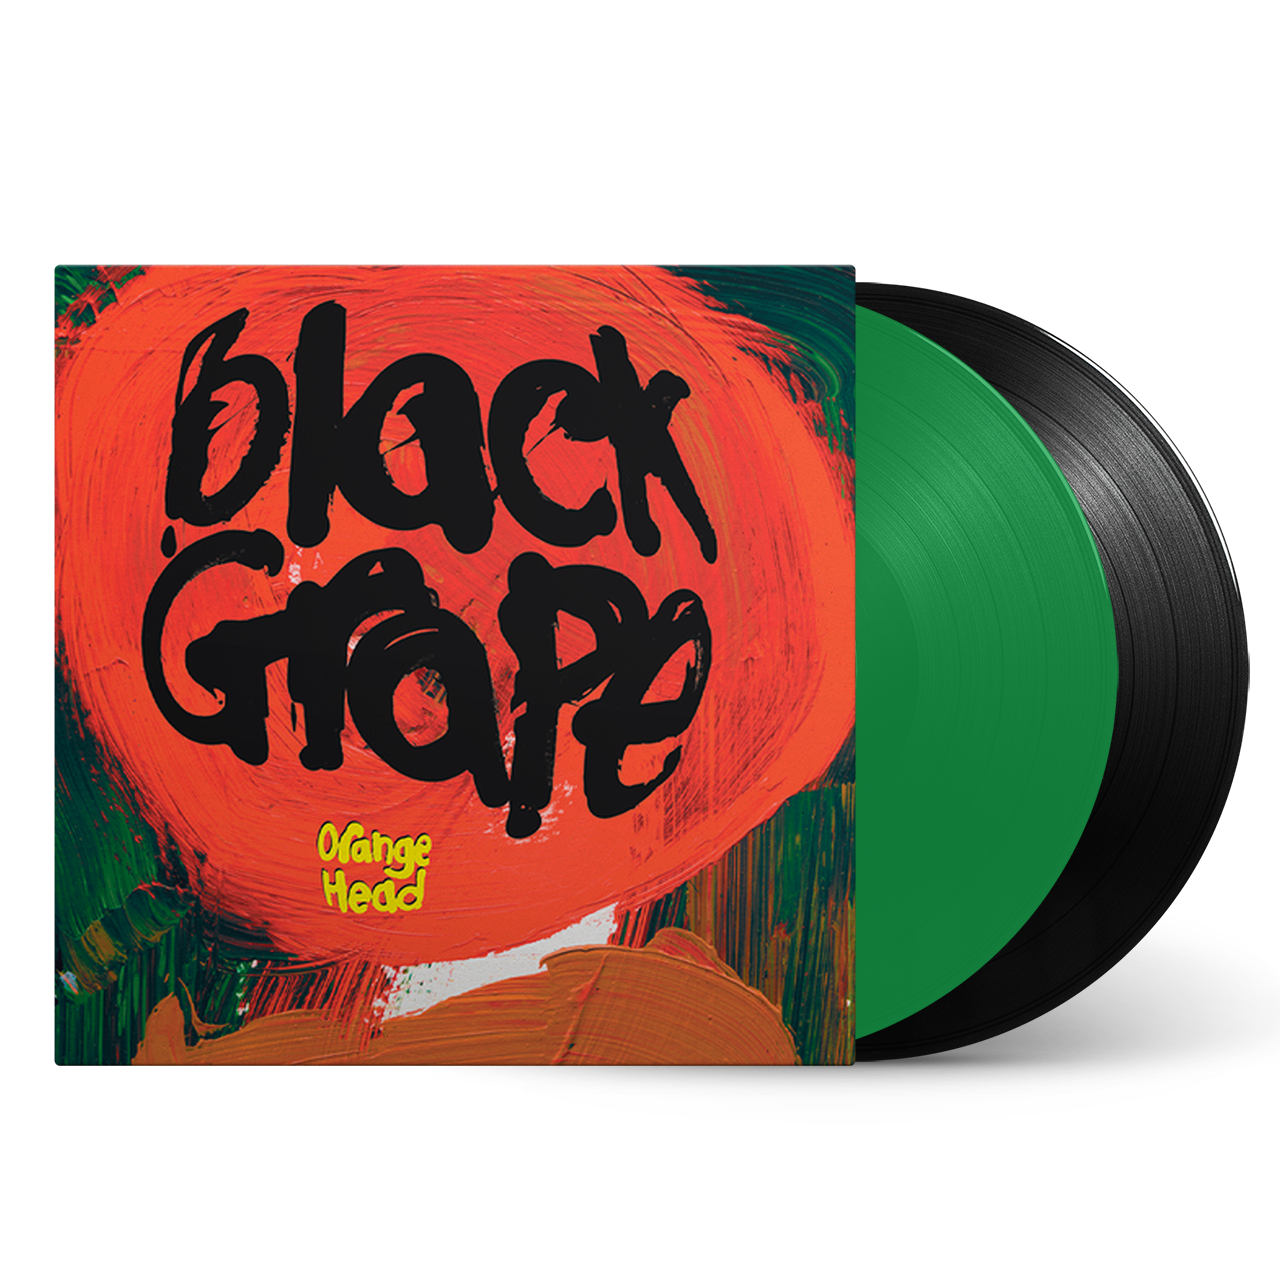 Orange Head: Exclusive Green/Black Vinyl 2LP + Signed Spot UV Litho Print